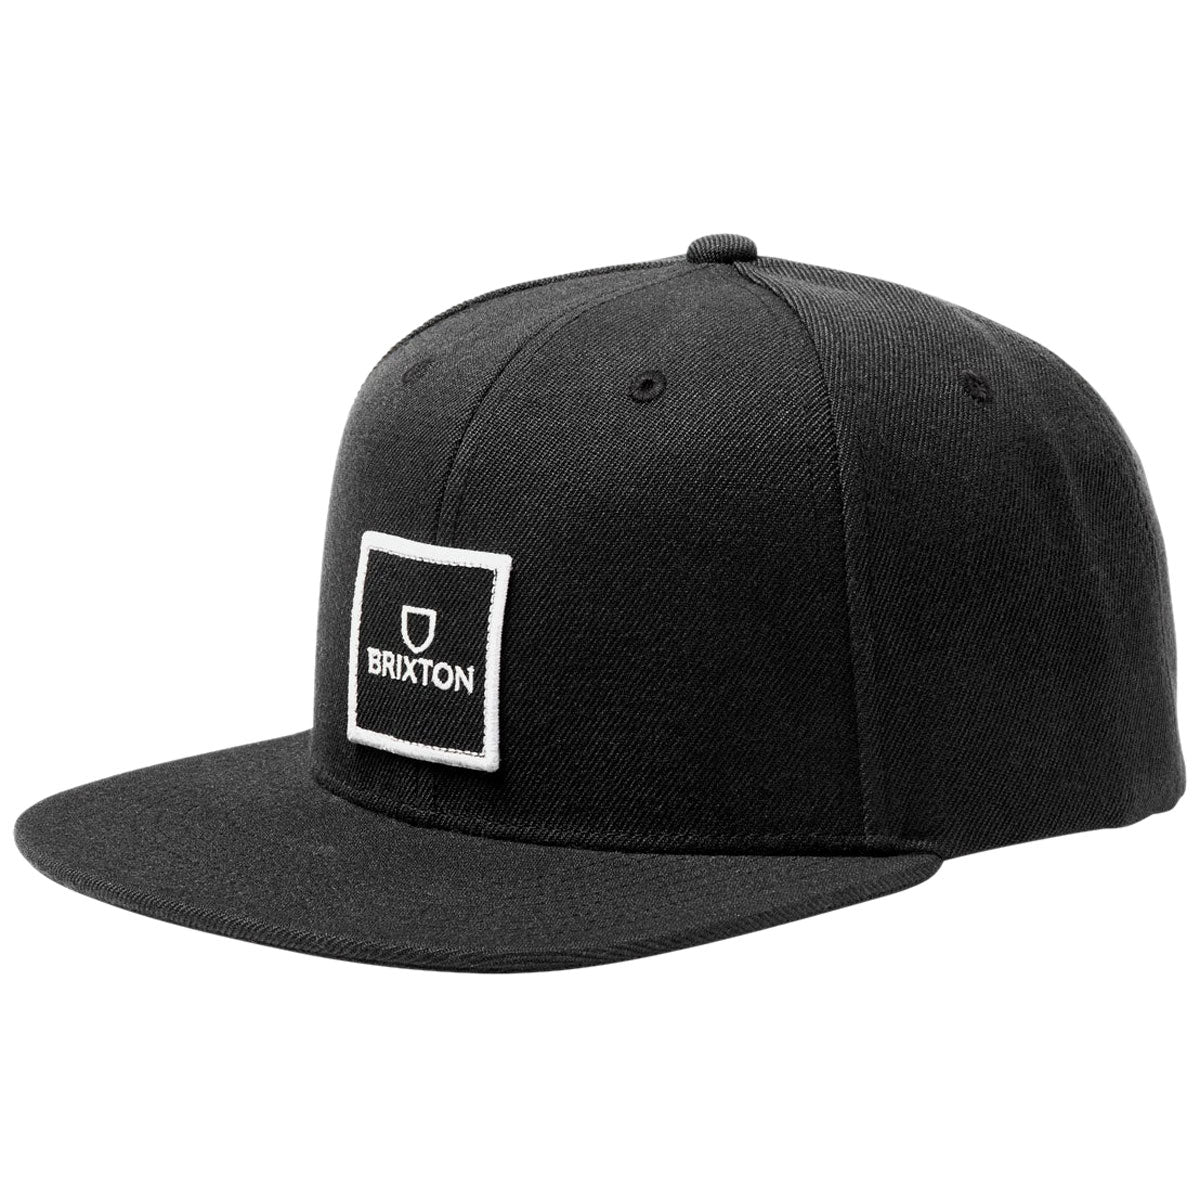 Brixton Alpha Square Mp Snapback Hat - Black/Black image 1